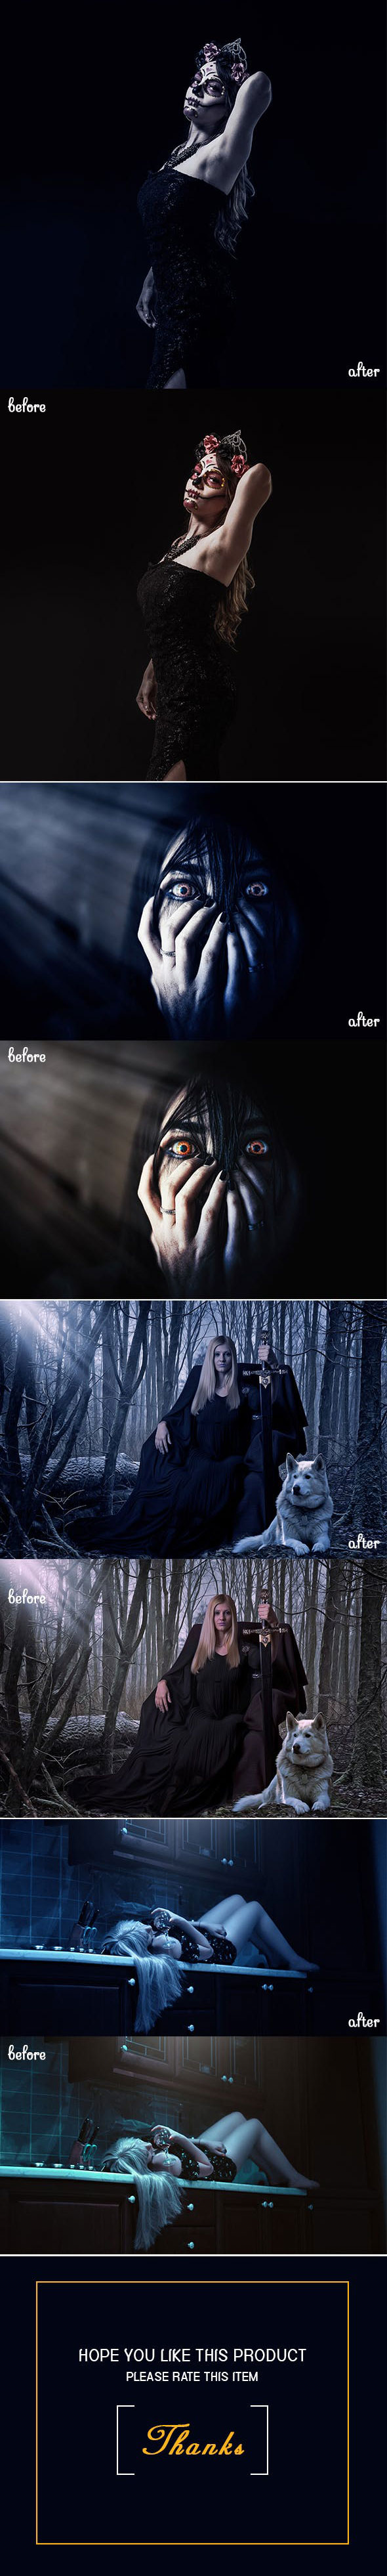 时尚高端图片黑暗哥特式风格的PS动作 Dark Gothic Photoshop Action [atn]插图1